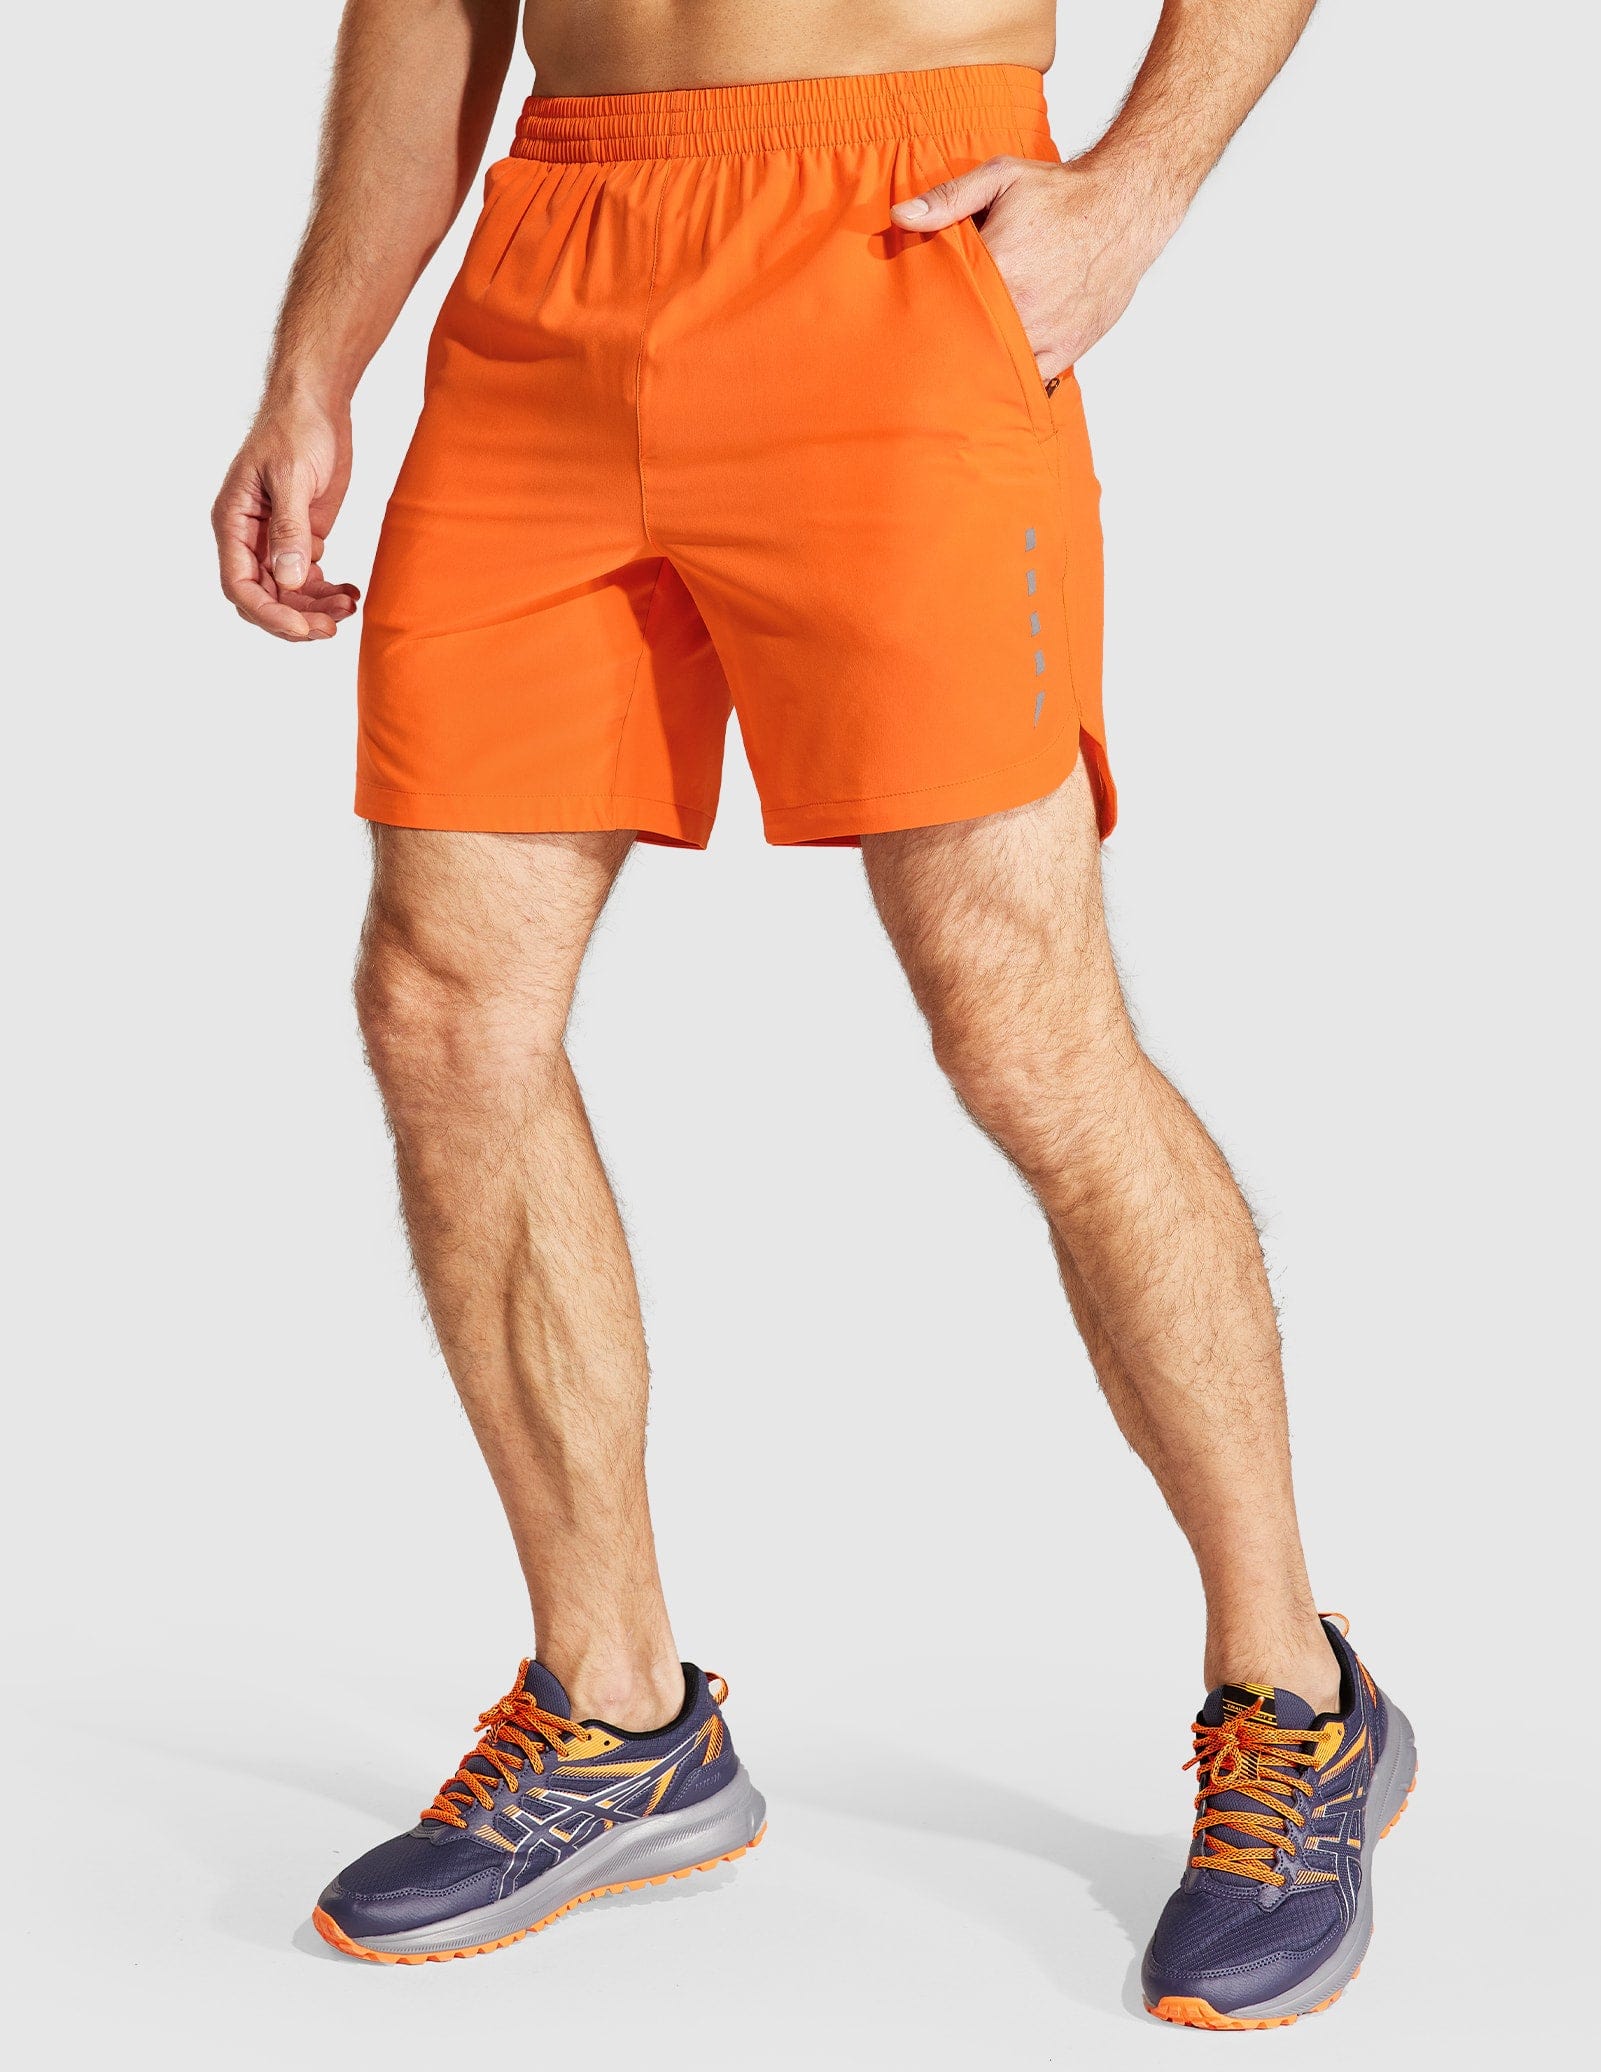 Men's 7 Inch Running Shorts Quick Dry with Zipper Pockets Men's Shorts Orange / S MIER